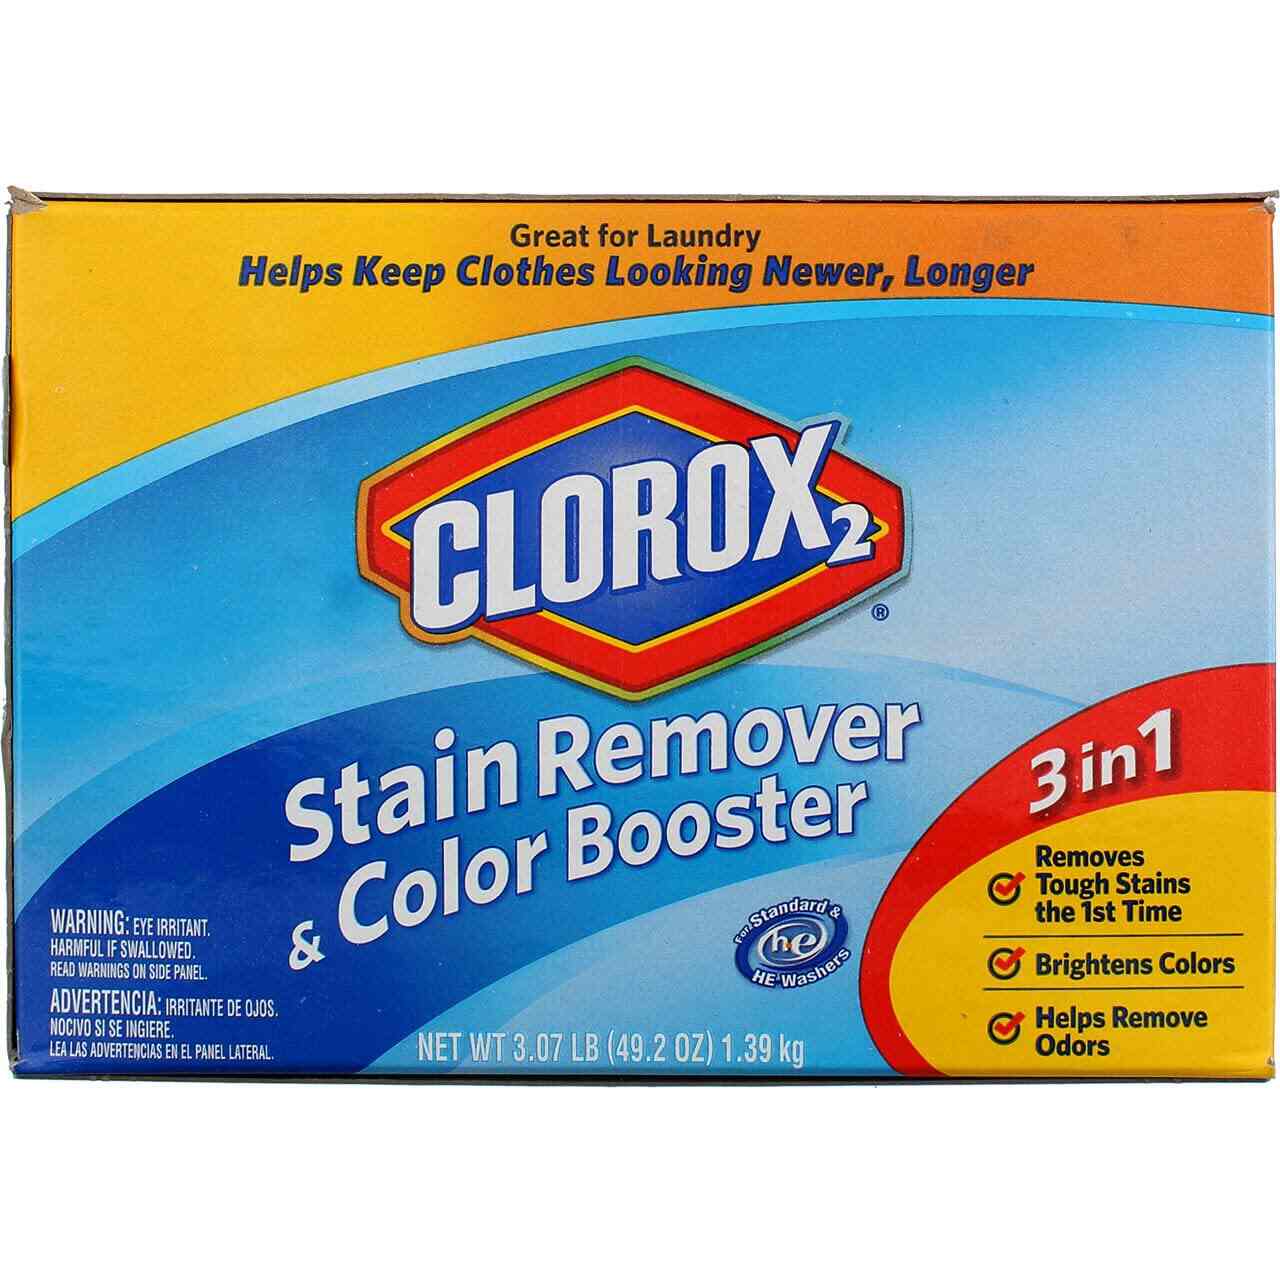 Clorox2 Detergent Powder 1.39 Kg Box, USA